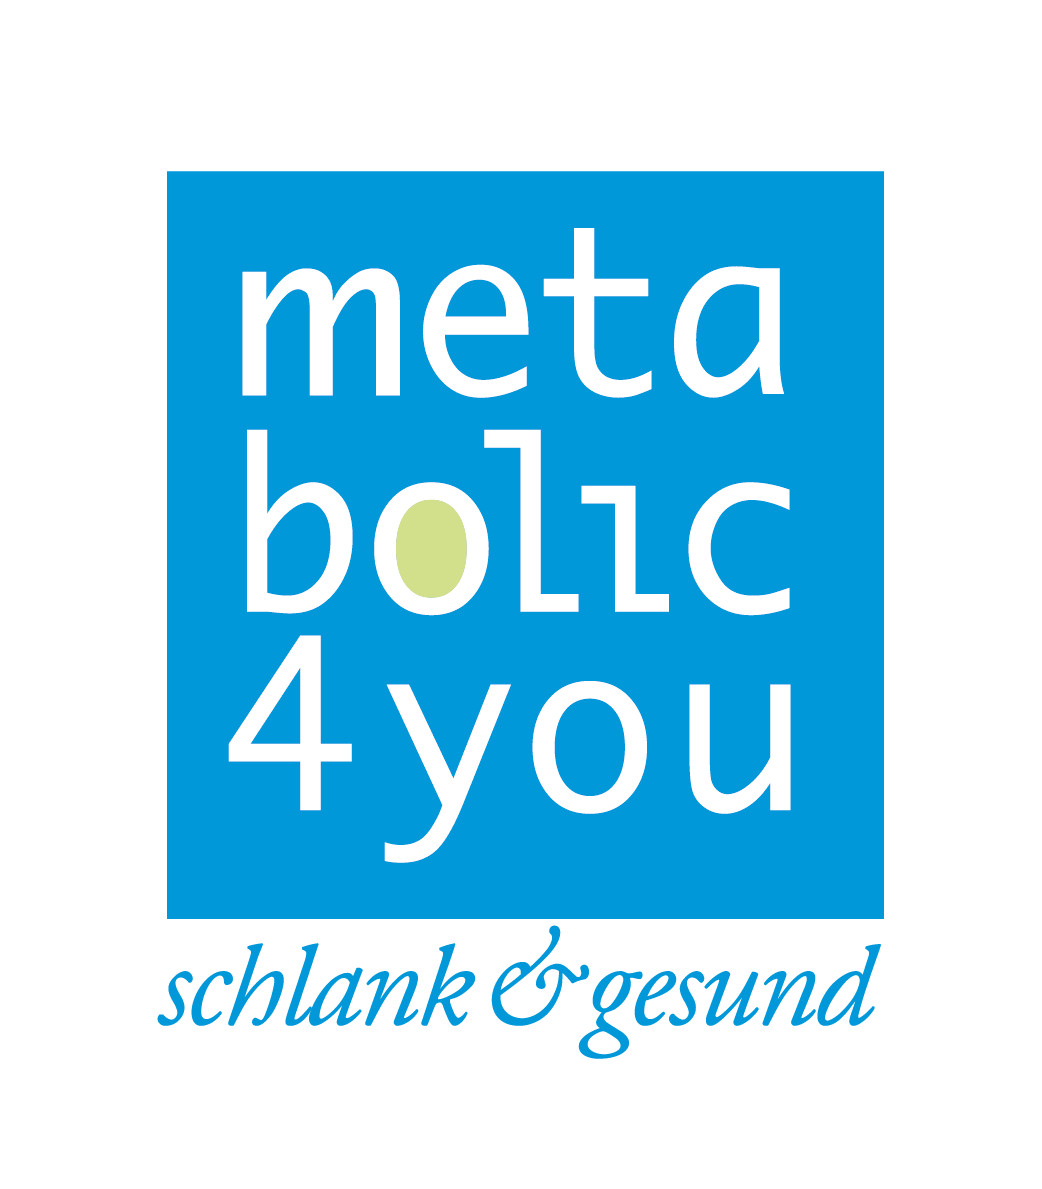 metabolic4you in Zürich